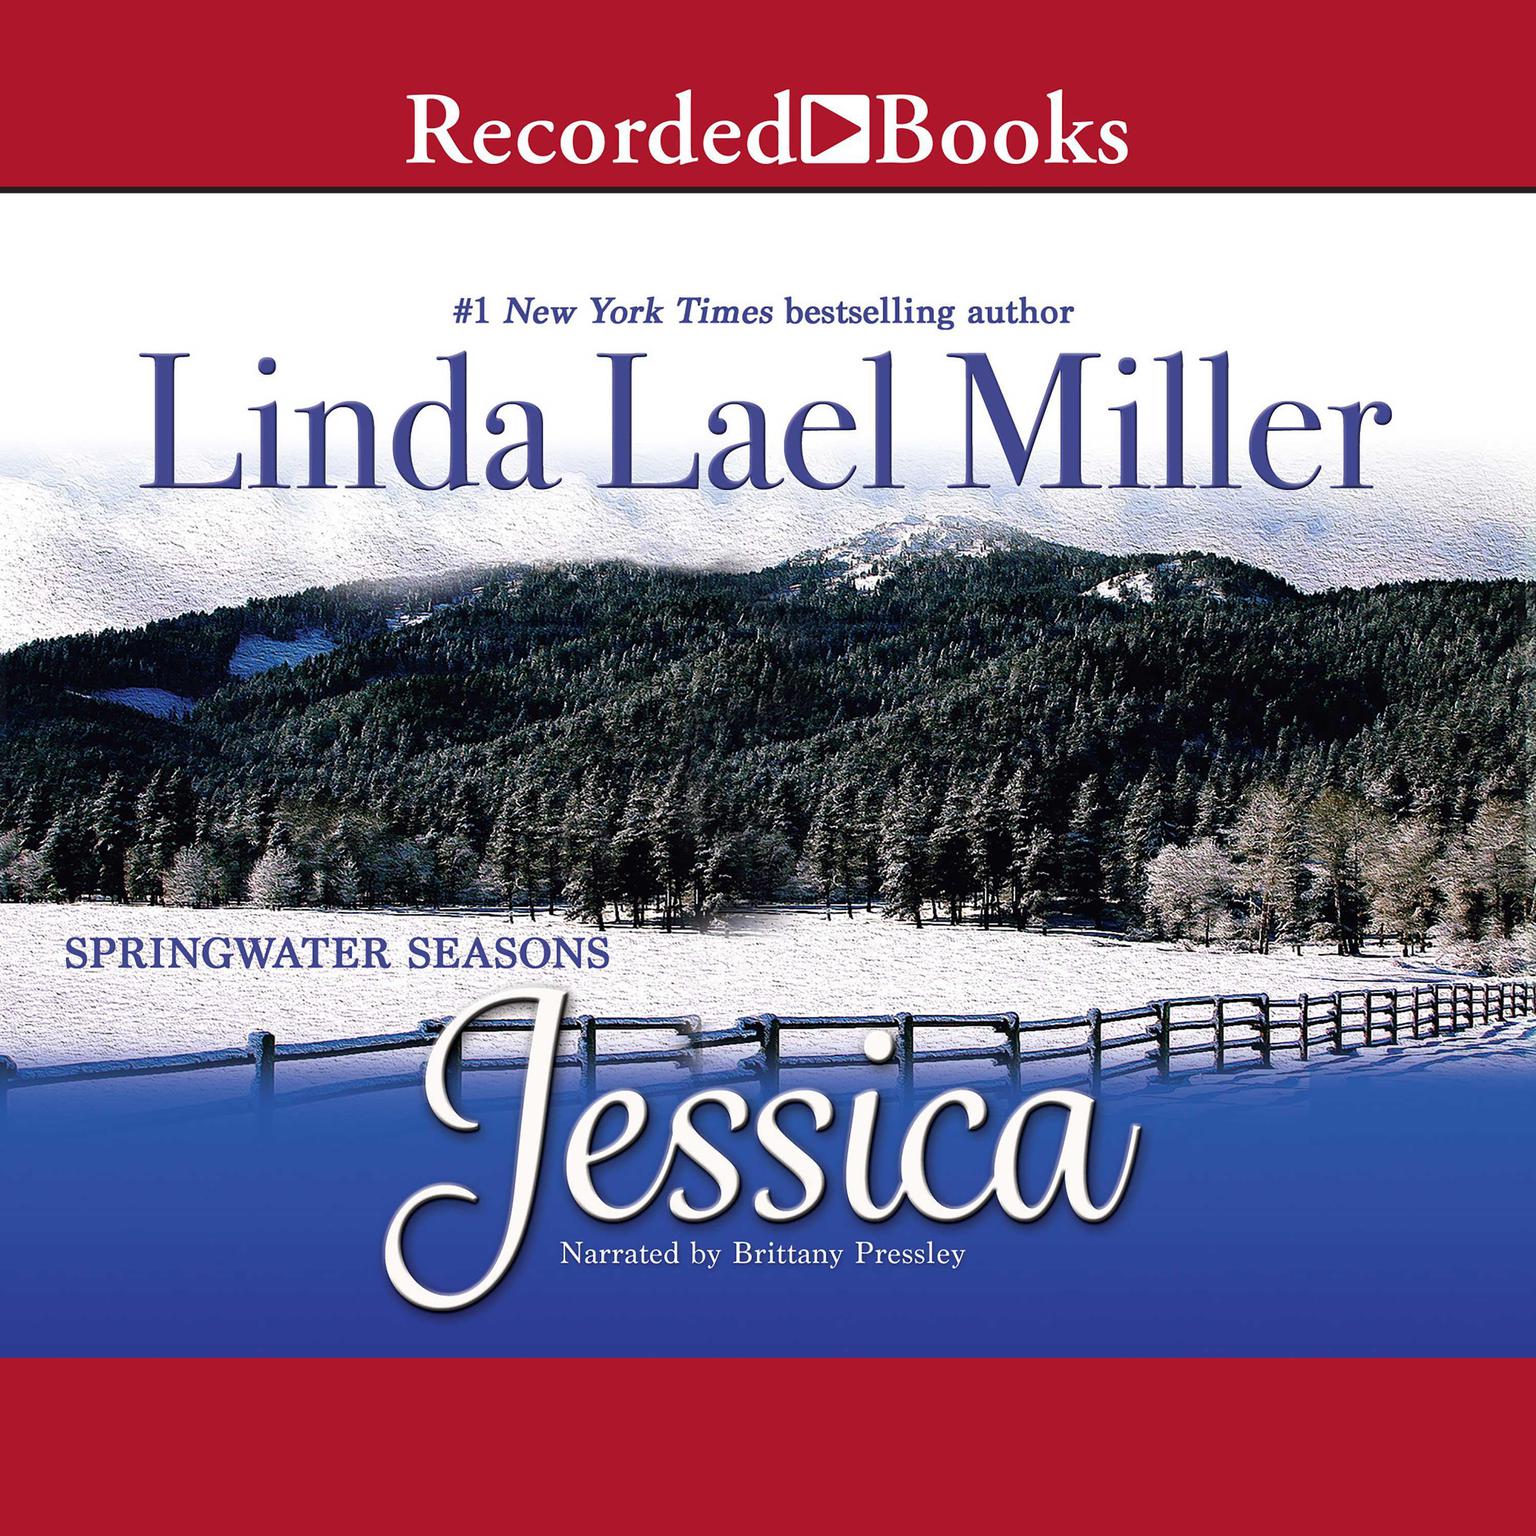 Jessica Audiobook, by Linda Lael Miller